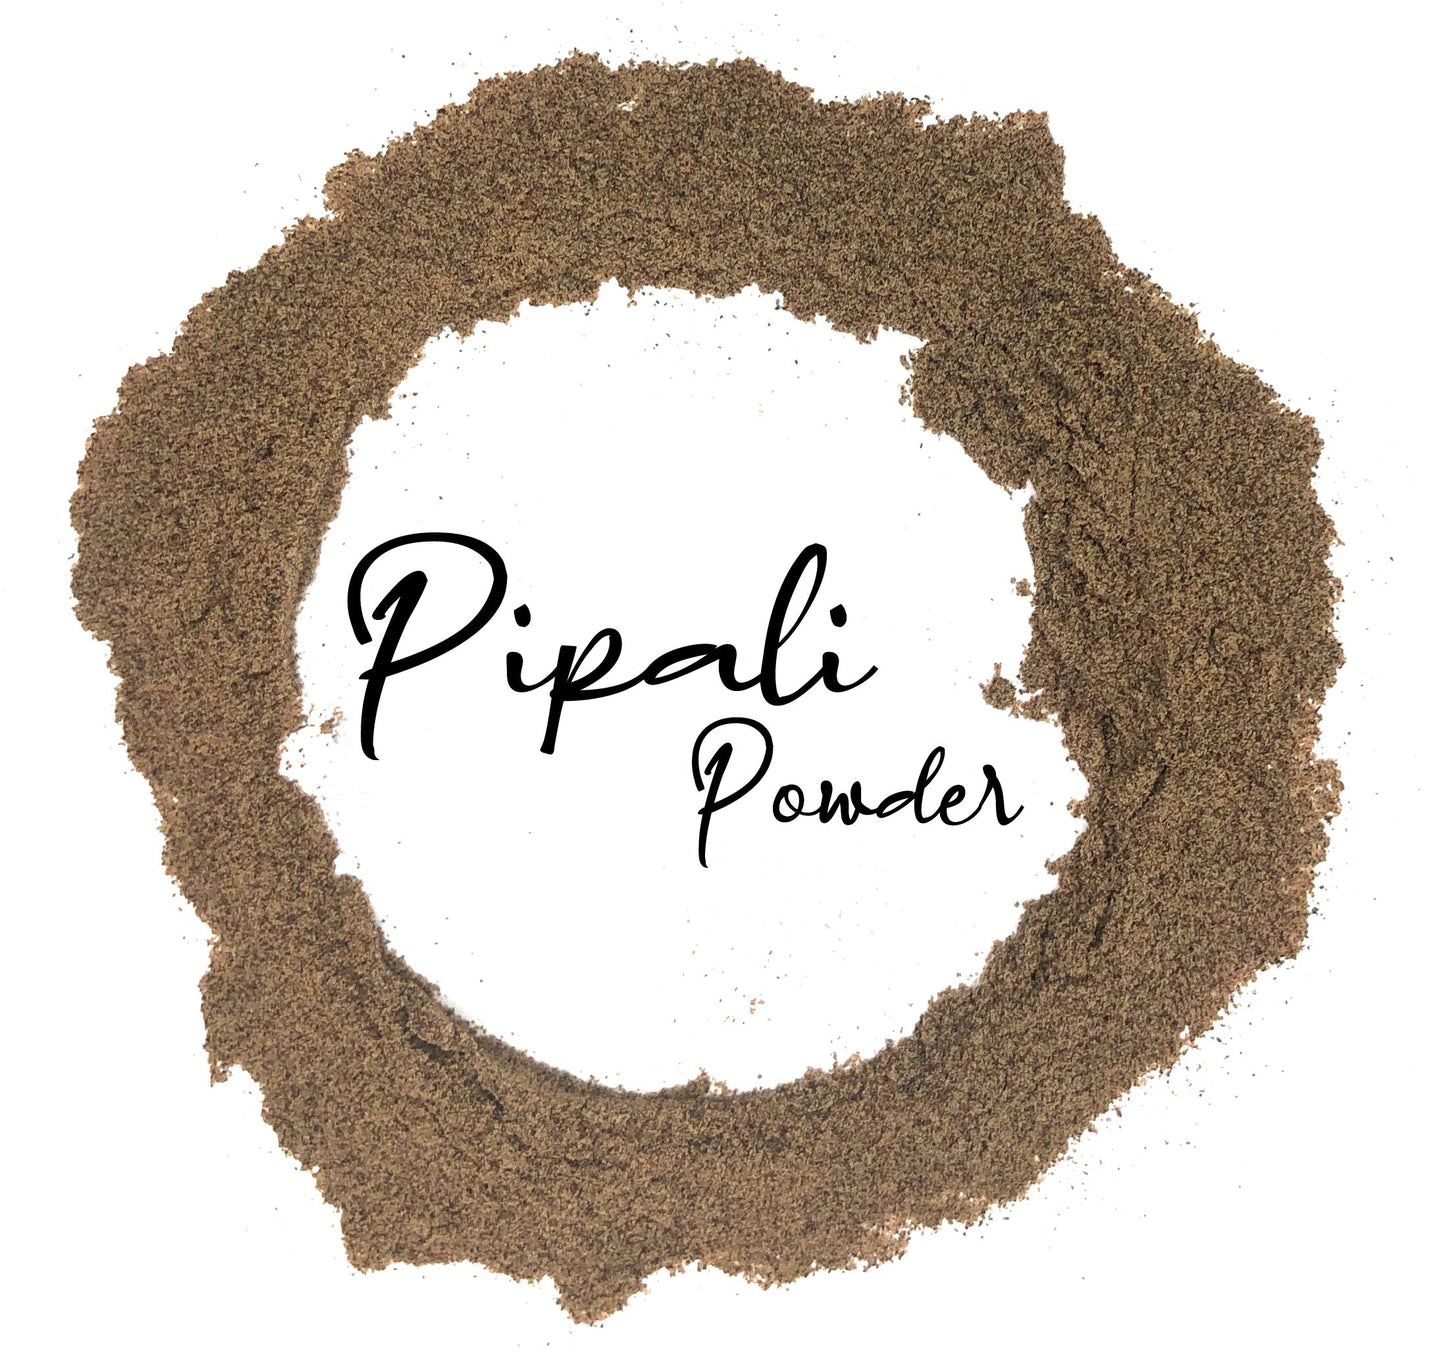 Wholesale Spices & Herbs - Pippali Powder, Organic 8oz (227g) Bag